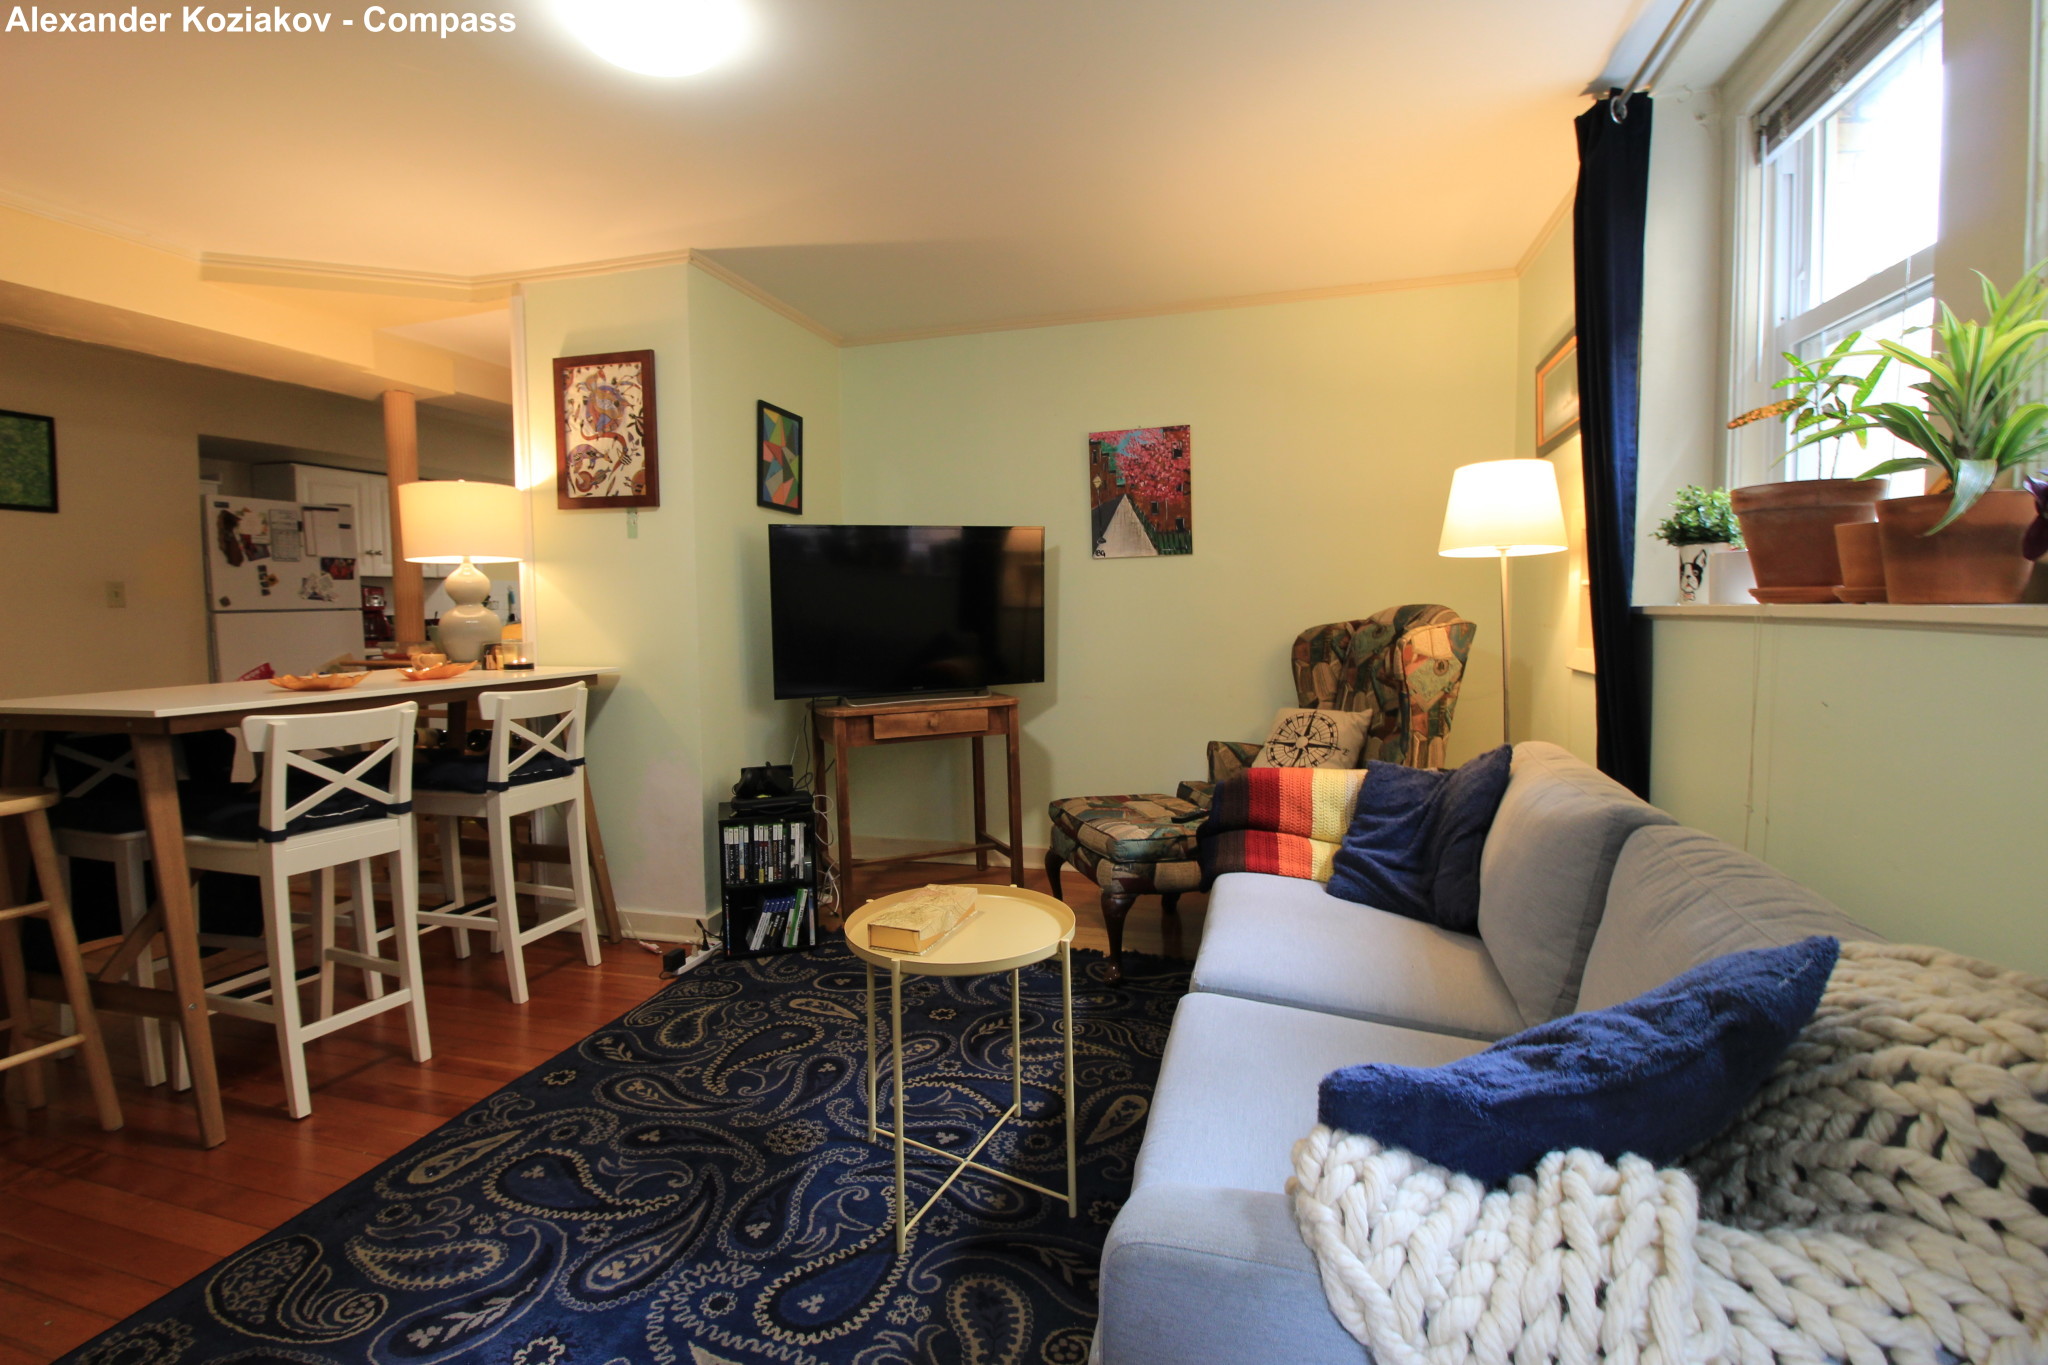 Photos of apartment on Wellman St.,Brookline MA 02446